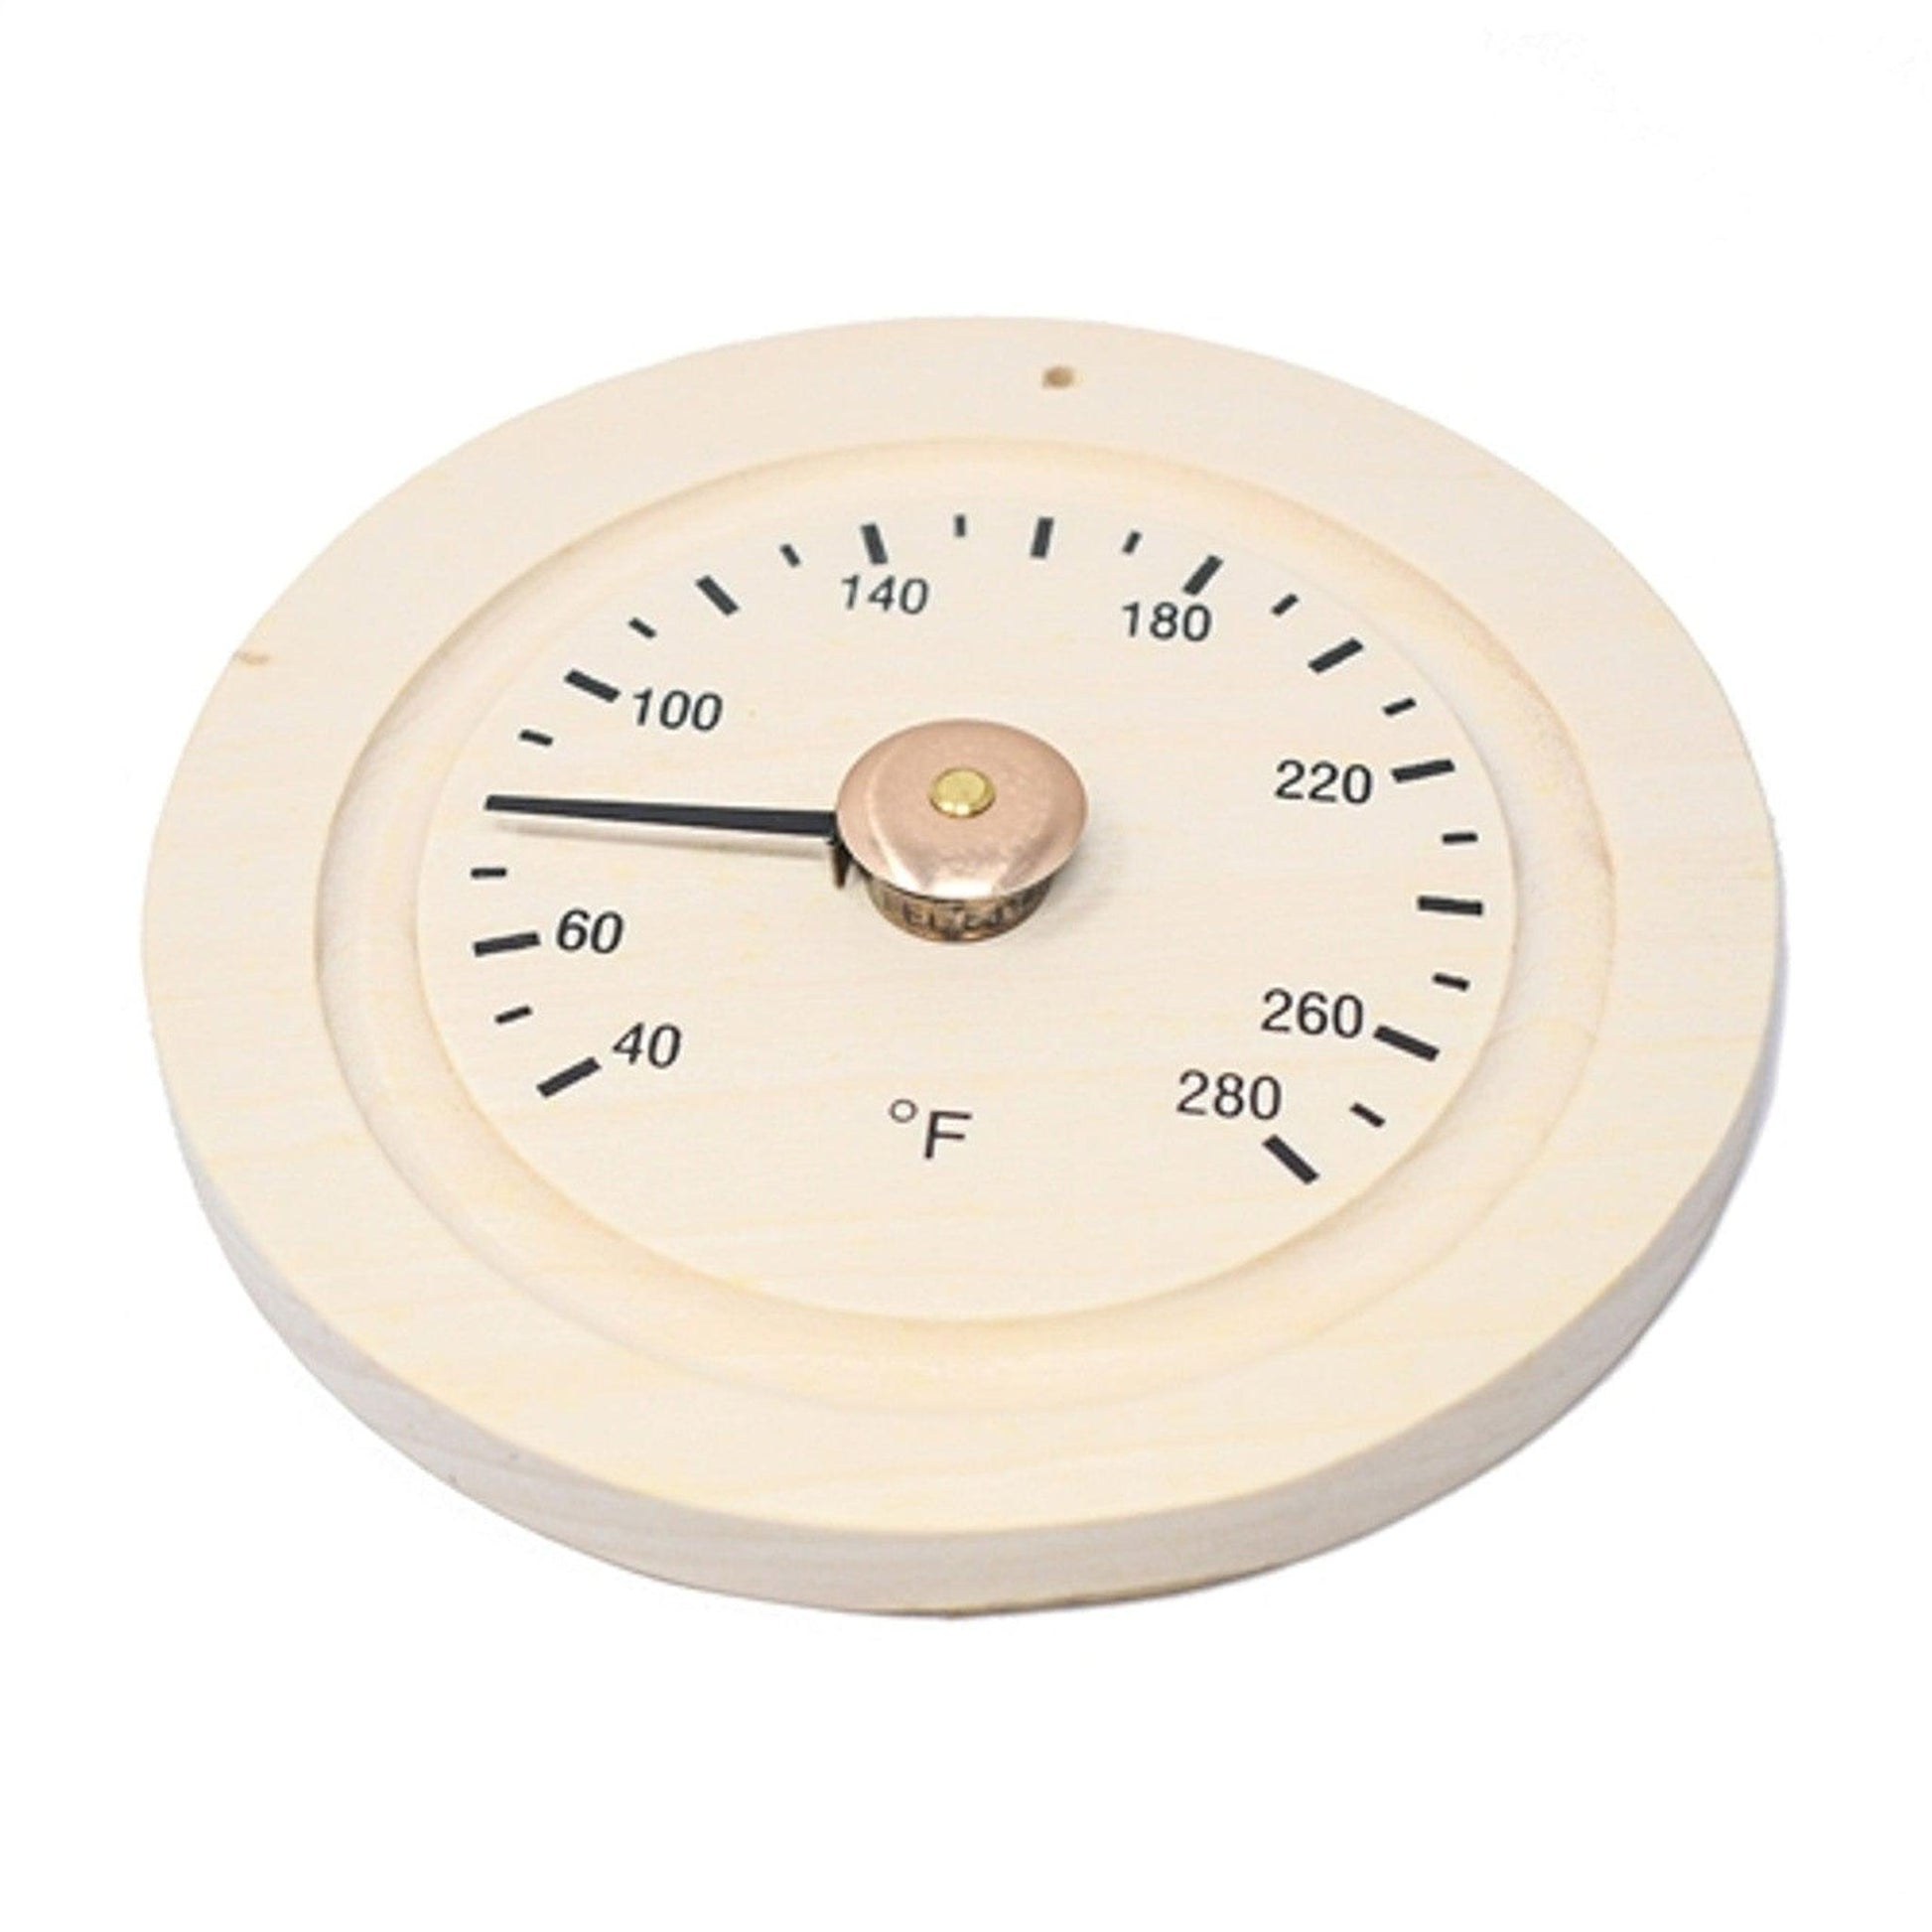 Aleko Round Thermometer Gage in Fahrenheit Sauna Accessory in Pine Wood Finish